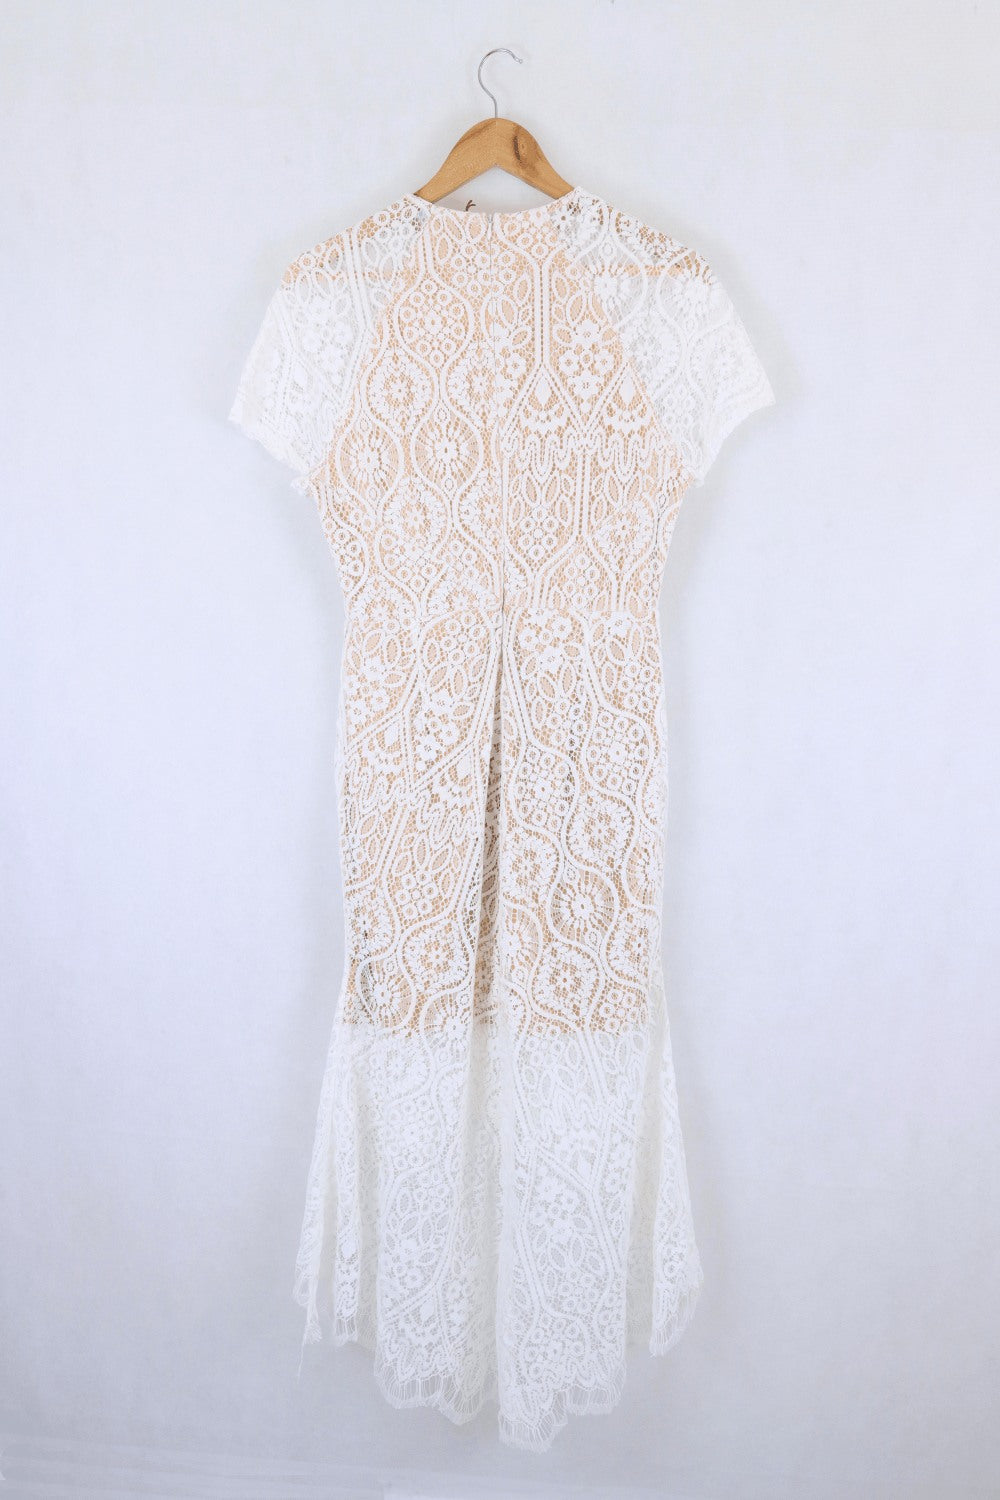 Mia White Lace Dress 16